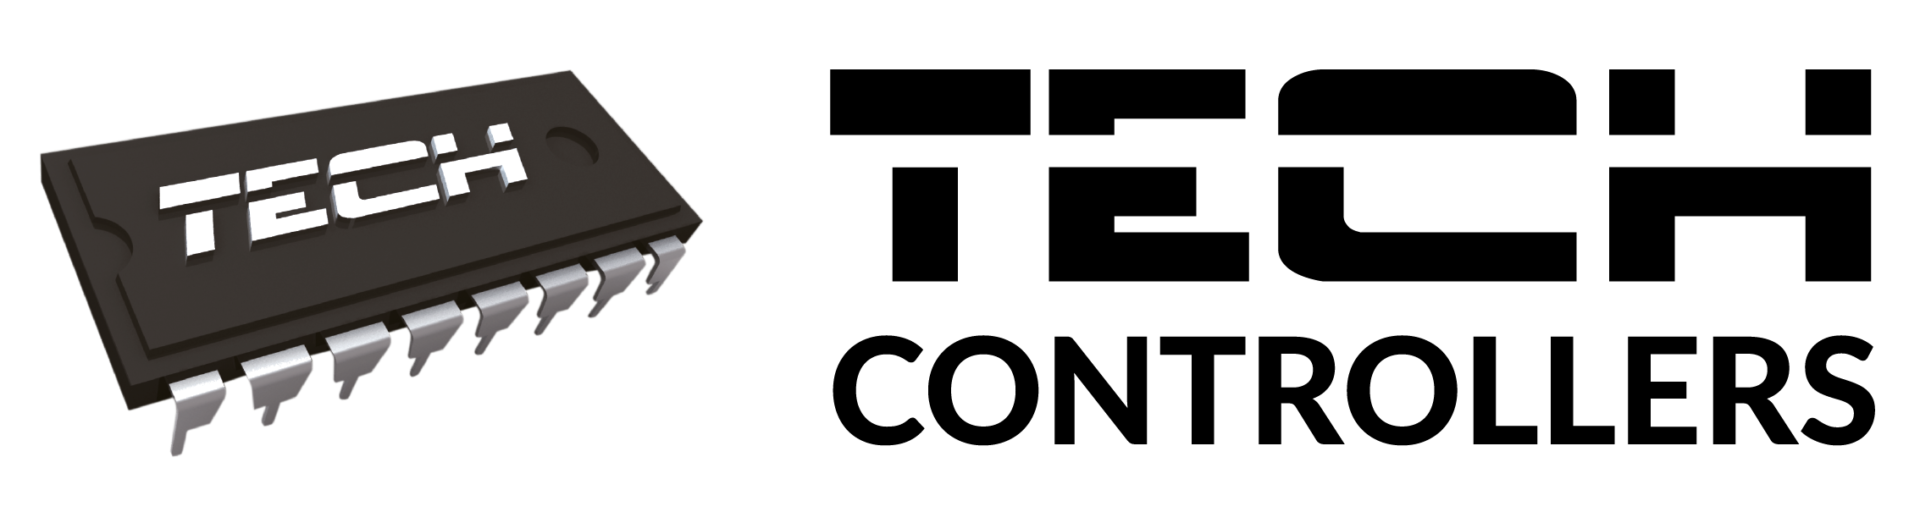 Logo-TECH_transparant